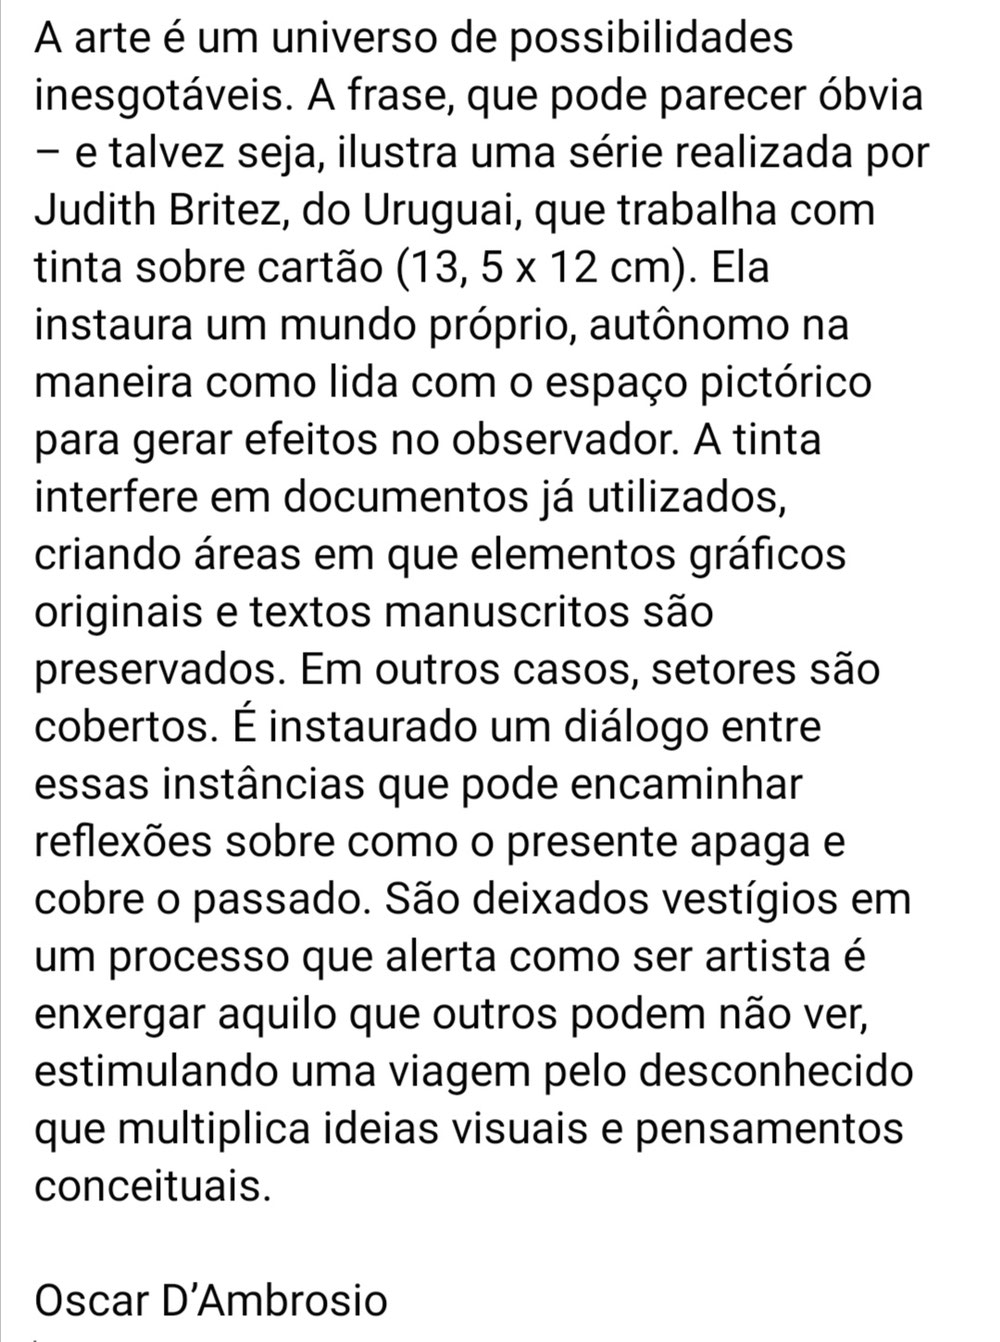 Crítico de arte - Oscar Dambrosio - BRASIL 2021